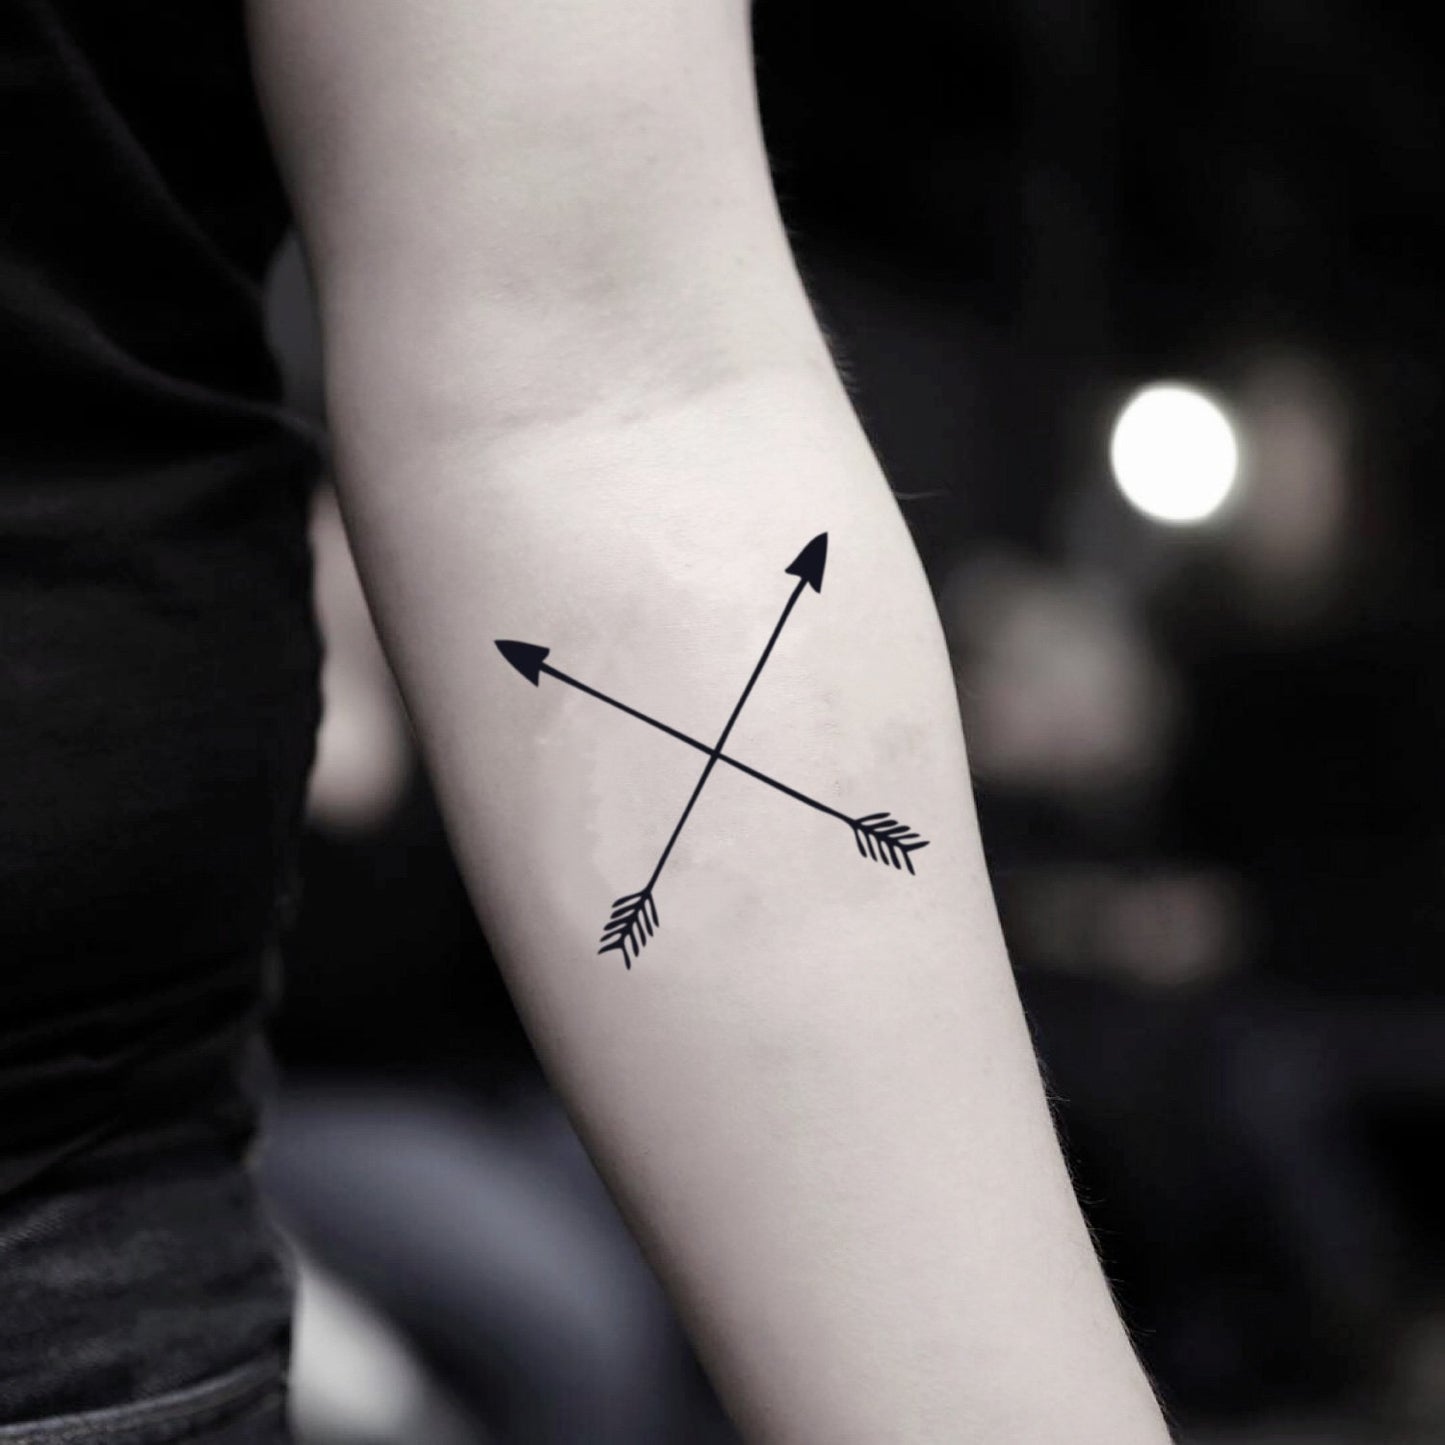 fake small black crossed double arrows minimalist temporary tattoo sticker design idea on inner arm